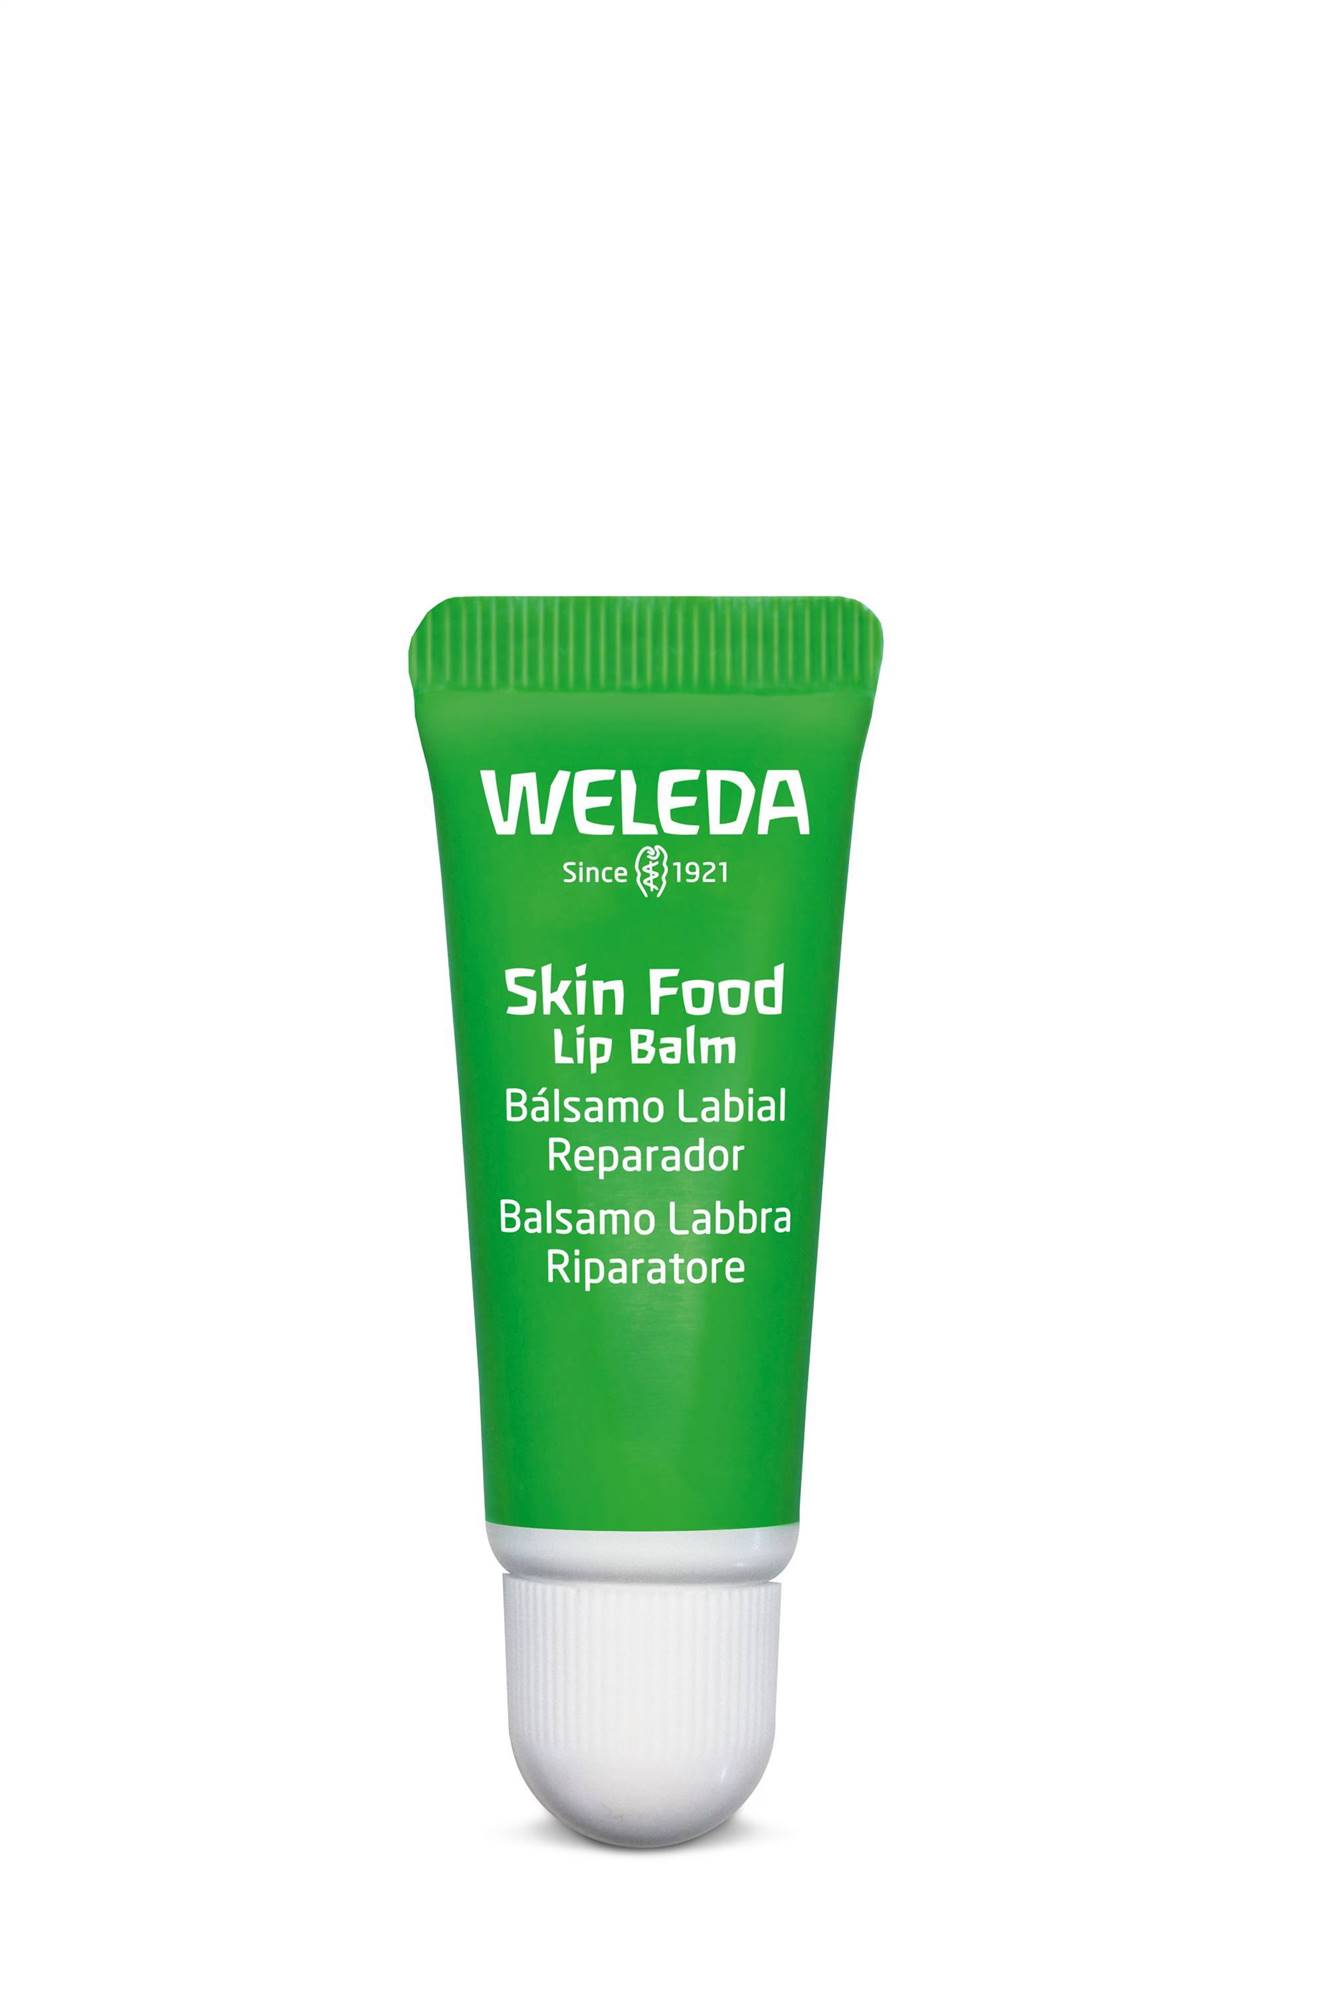 Skin Food Lip Balm de Weleda